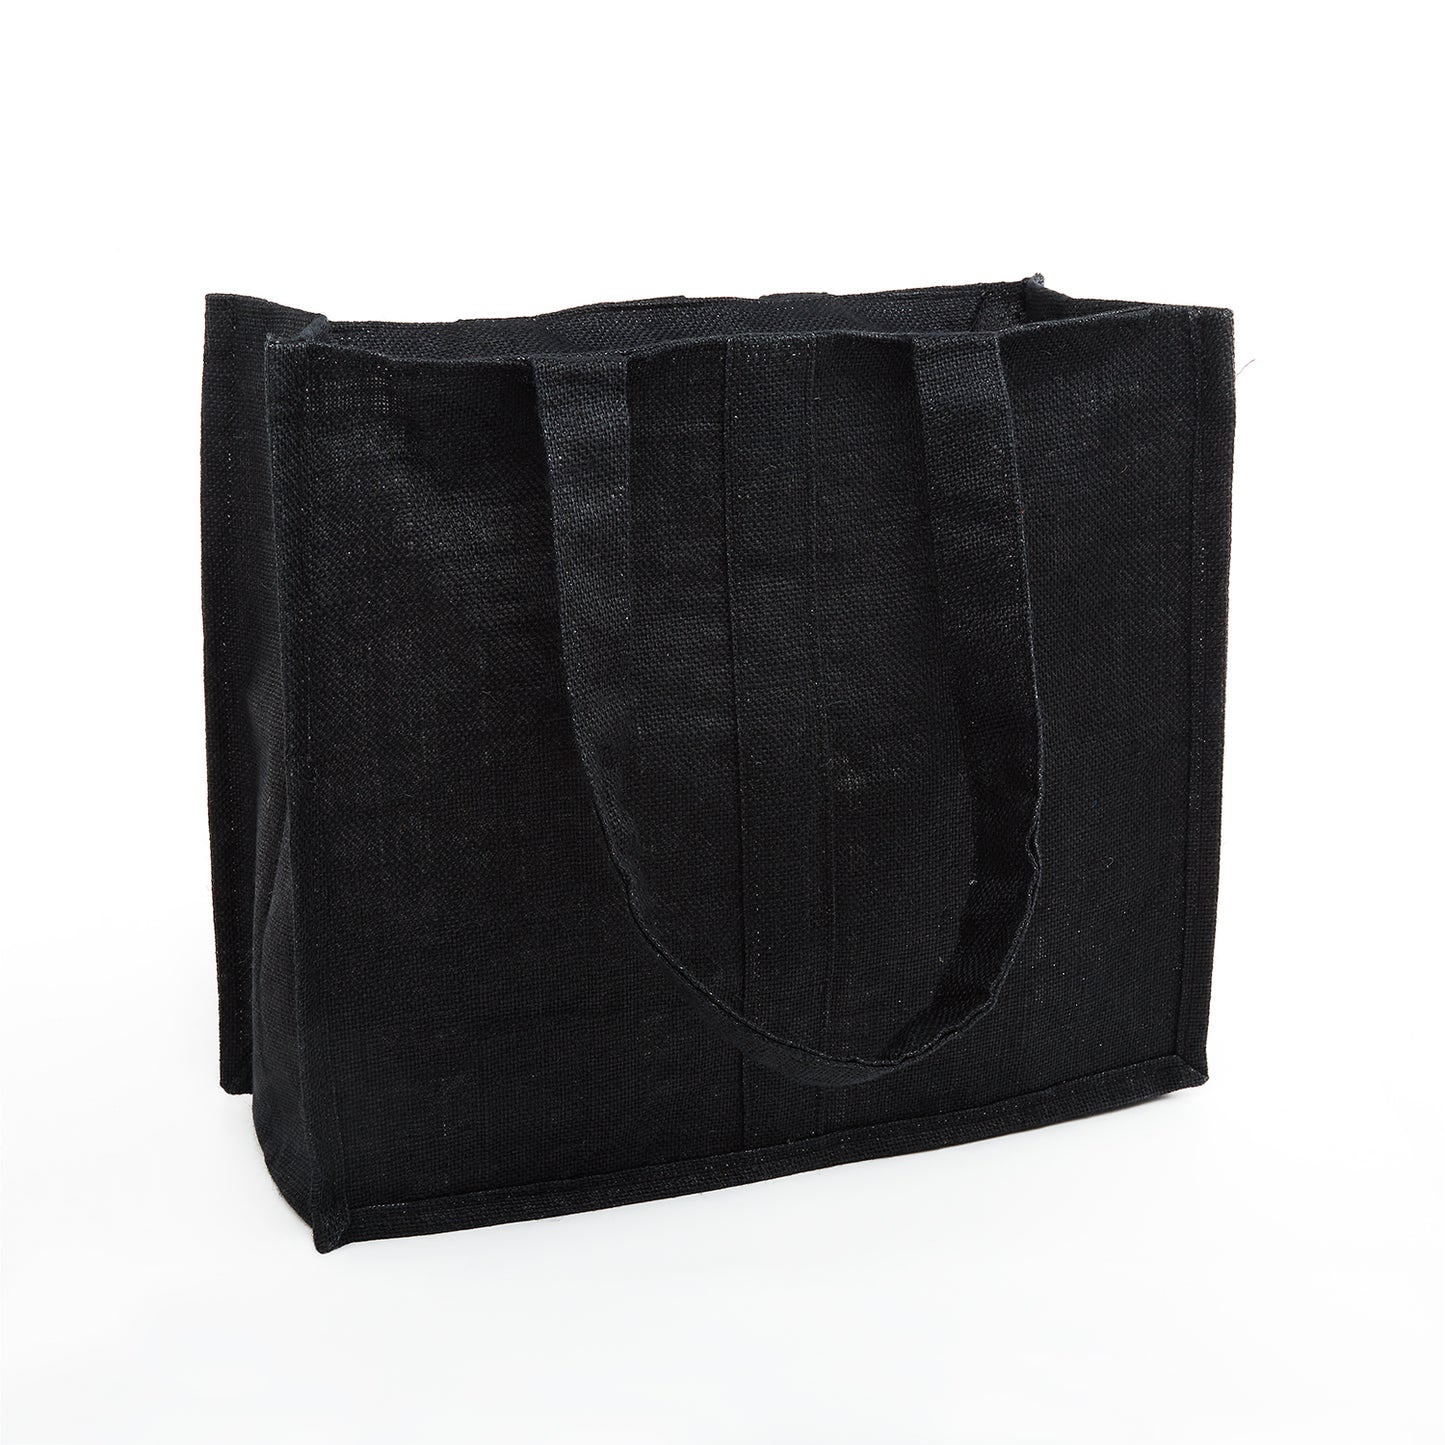 Charcoal Black - Jute Bag